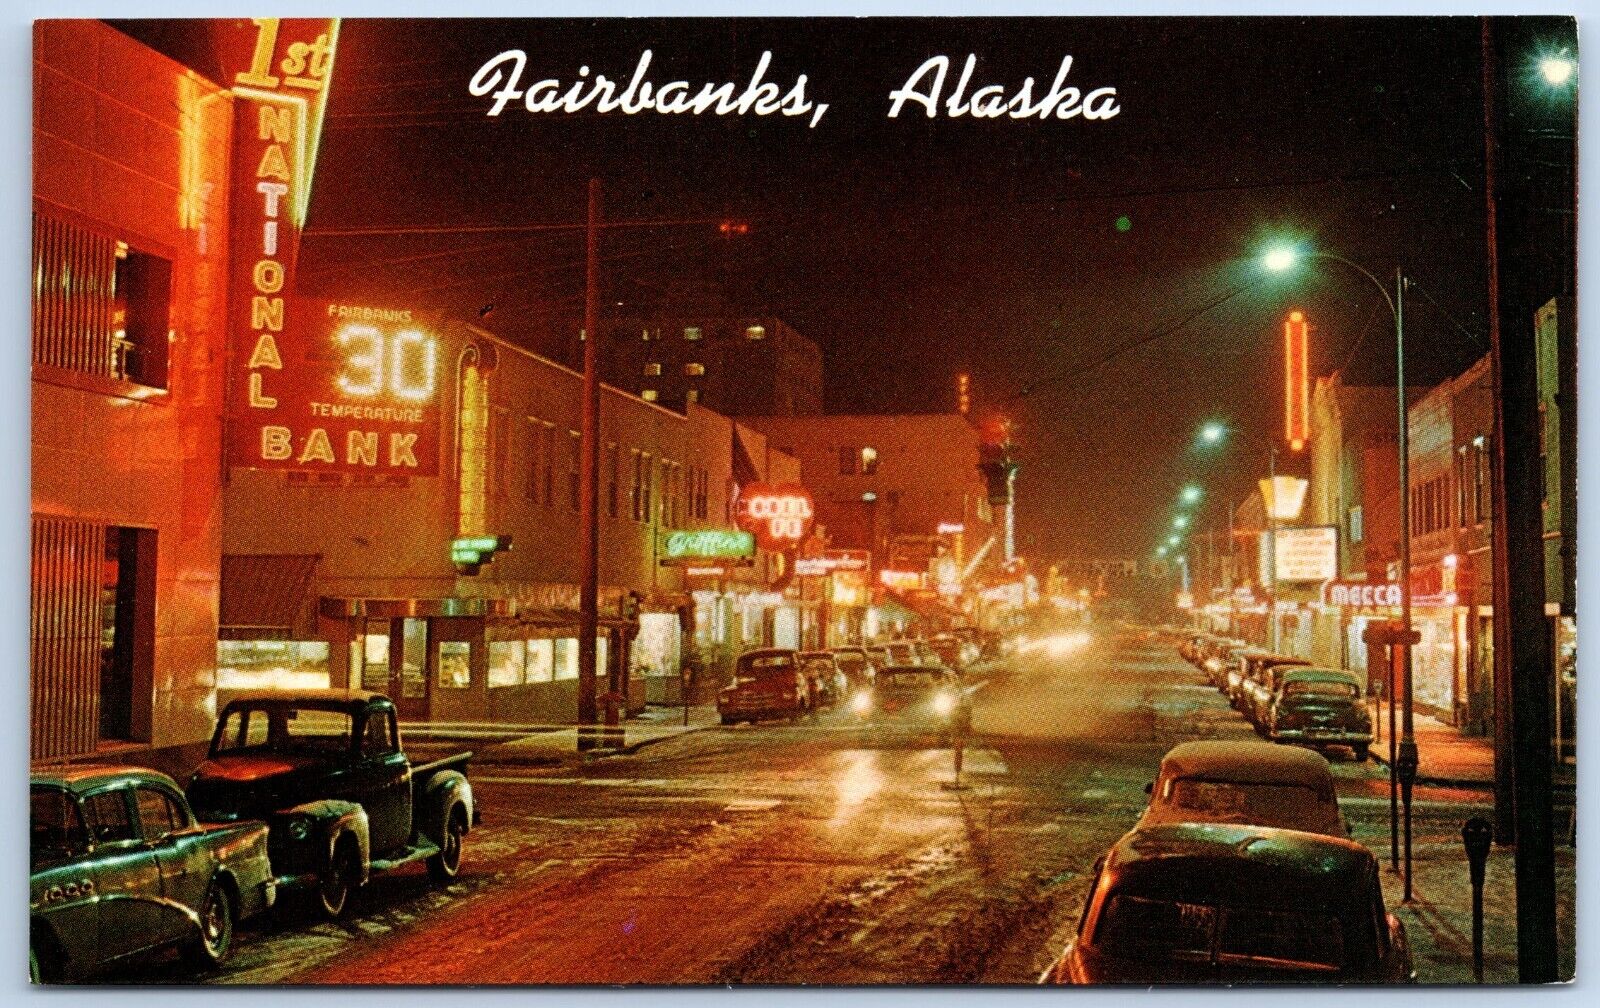 Fairbanks at Night 1st National Bar, Griffins, Mecca Alaska Postcard